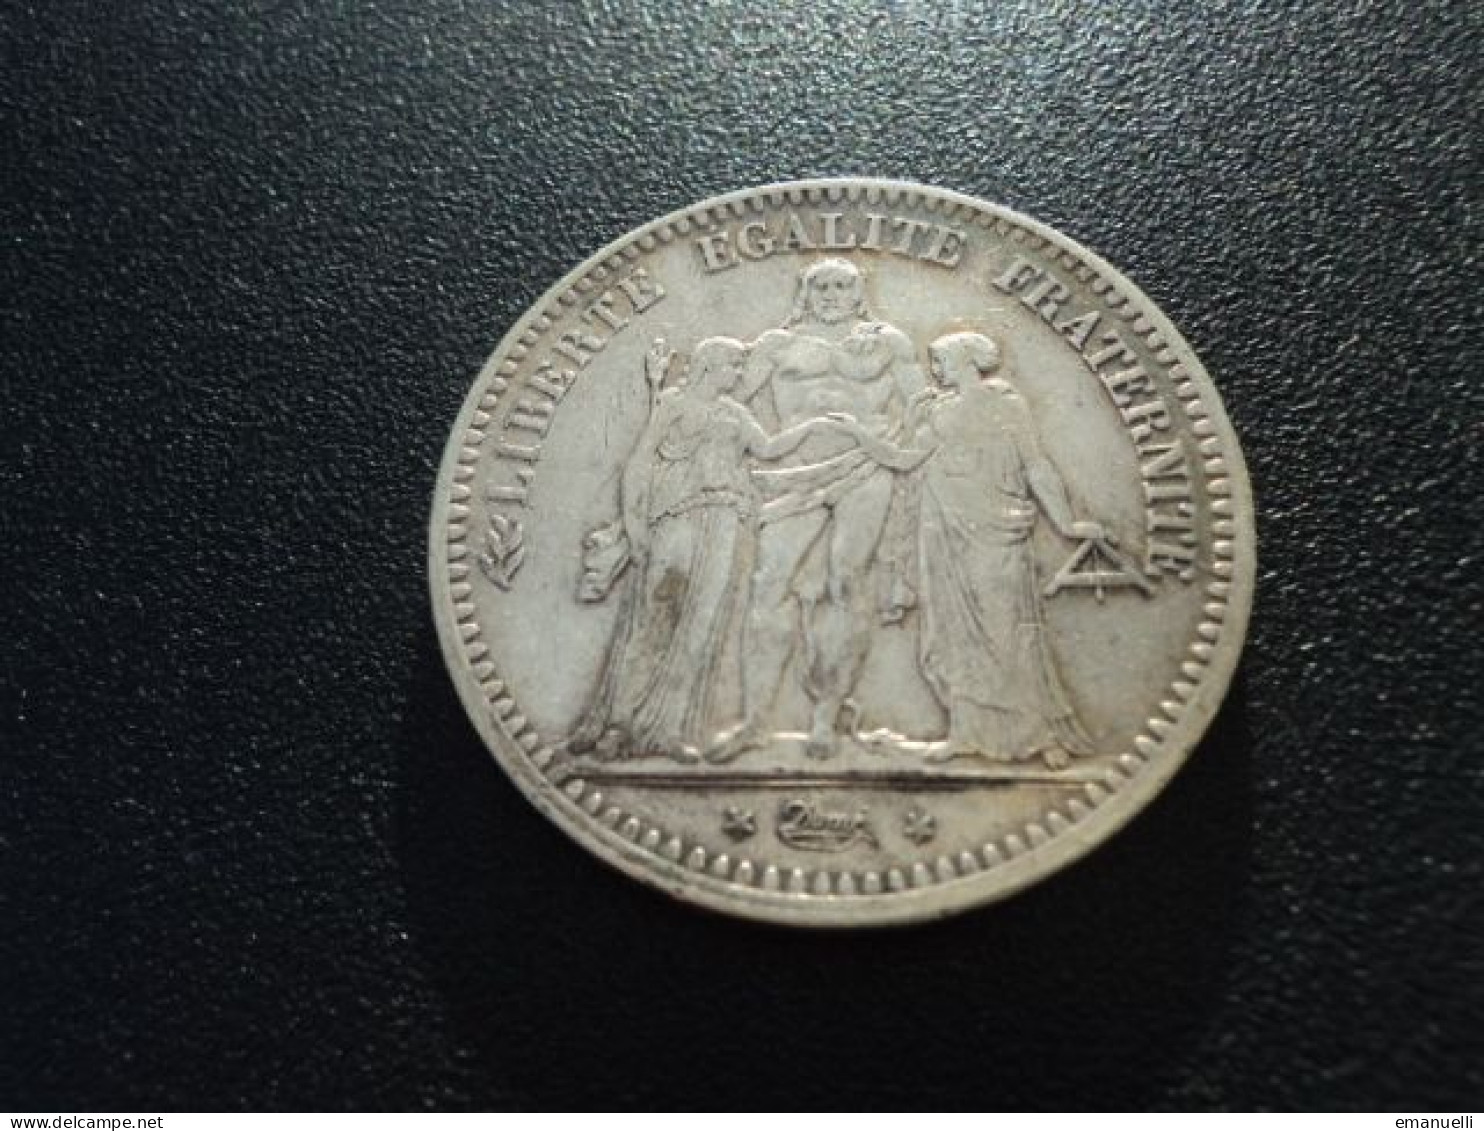 FRANCE : 5 FRANCS   1849 A *   F.326 / G.683 / KM 756.1     TTB - 5 Francs (gold)